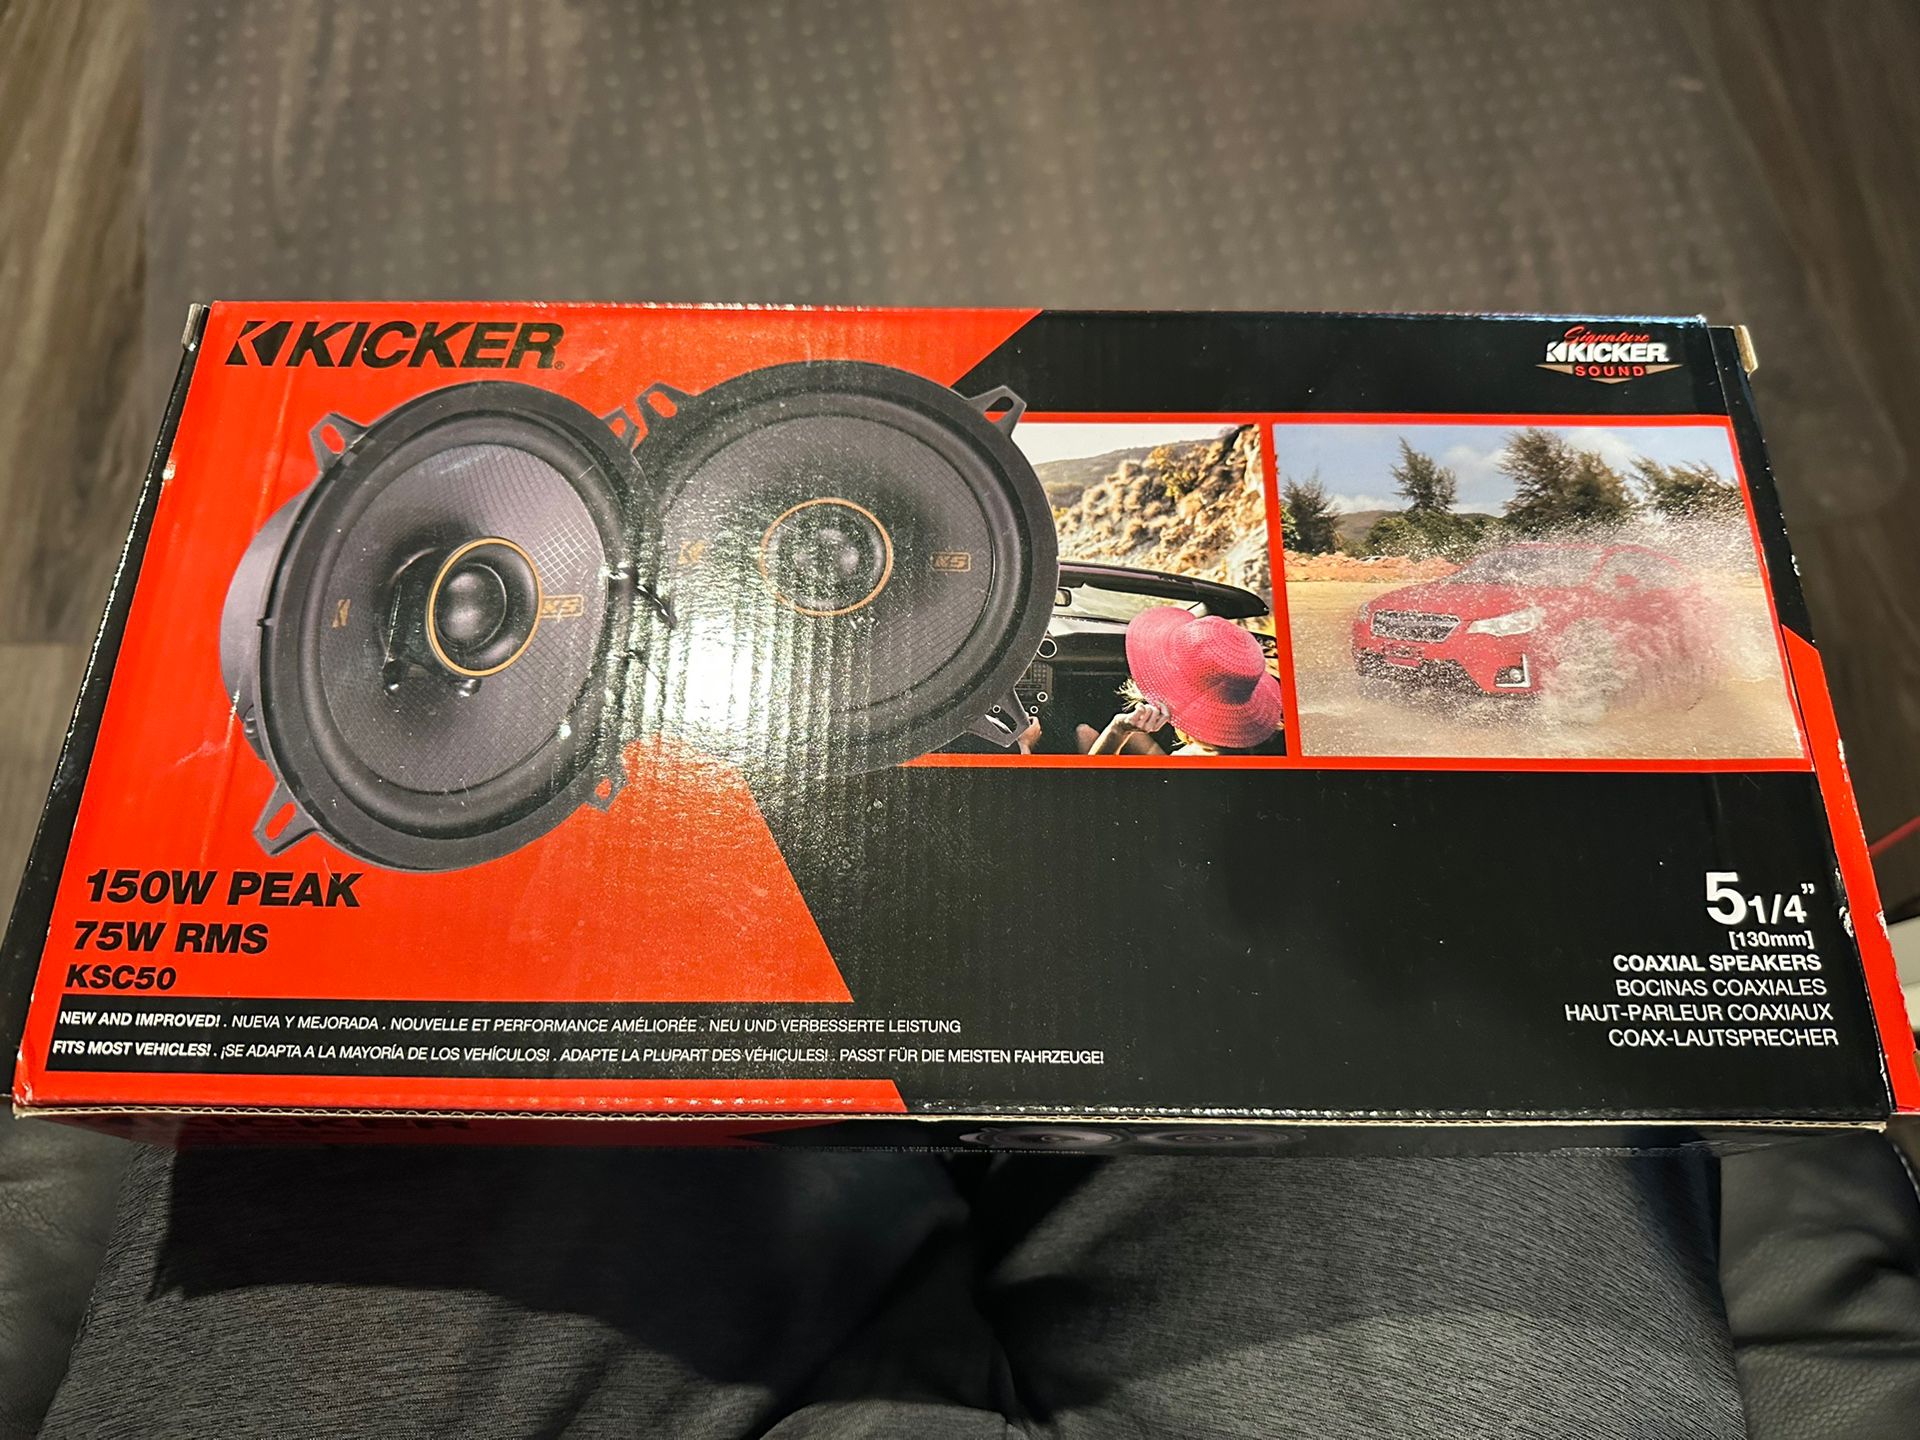 kicker 5 1/4” speakers 150w new in opened box